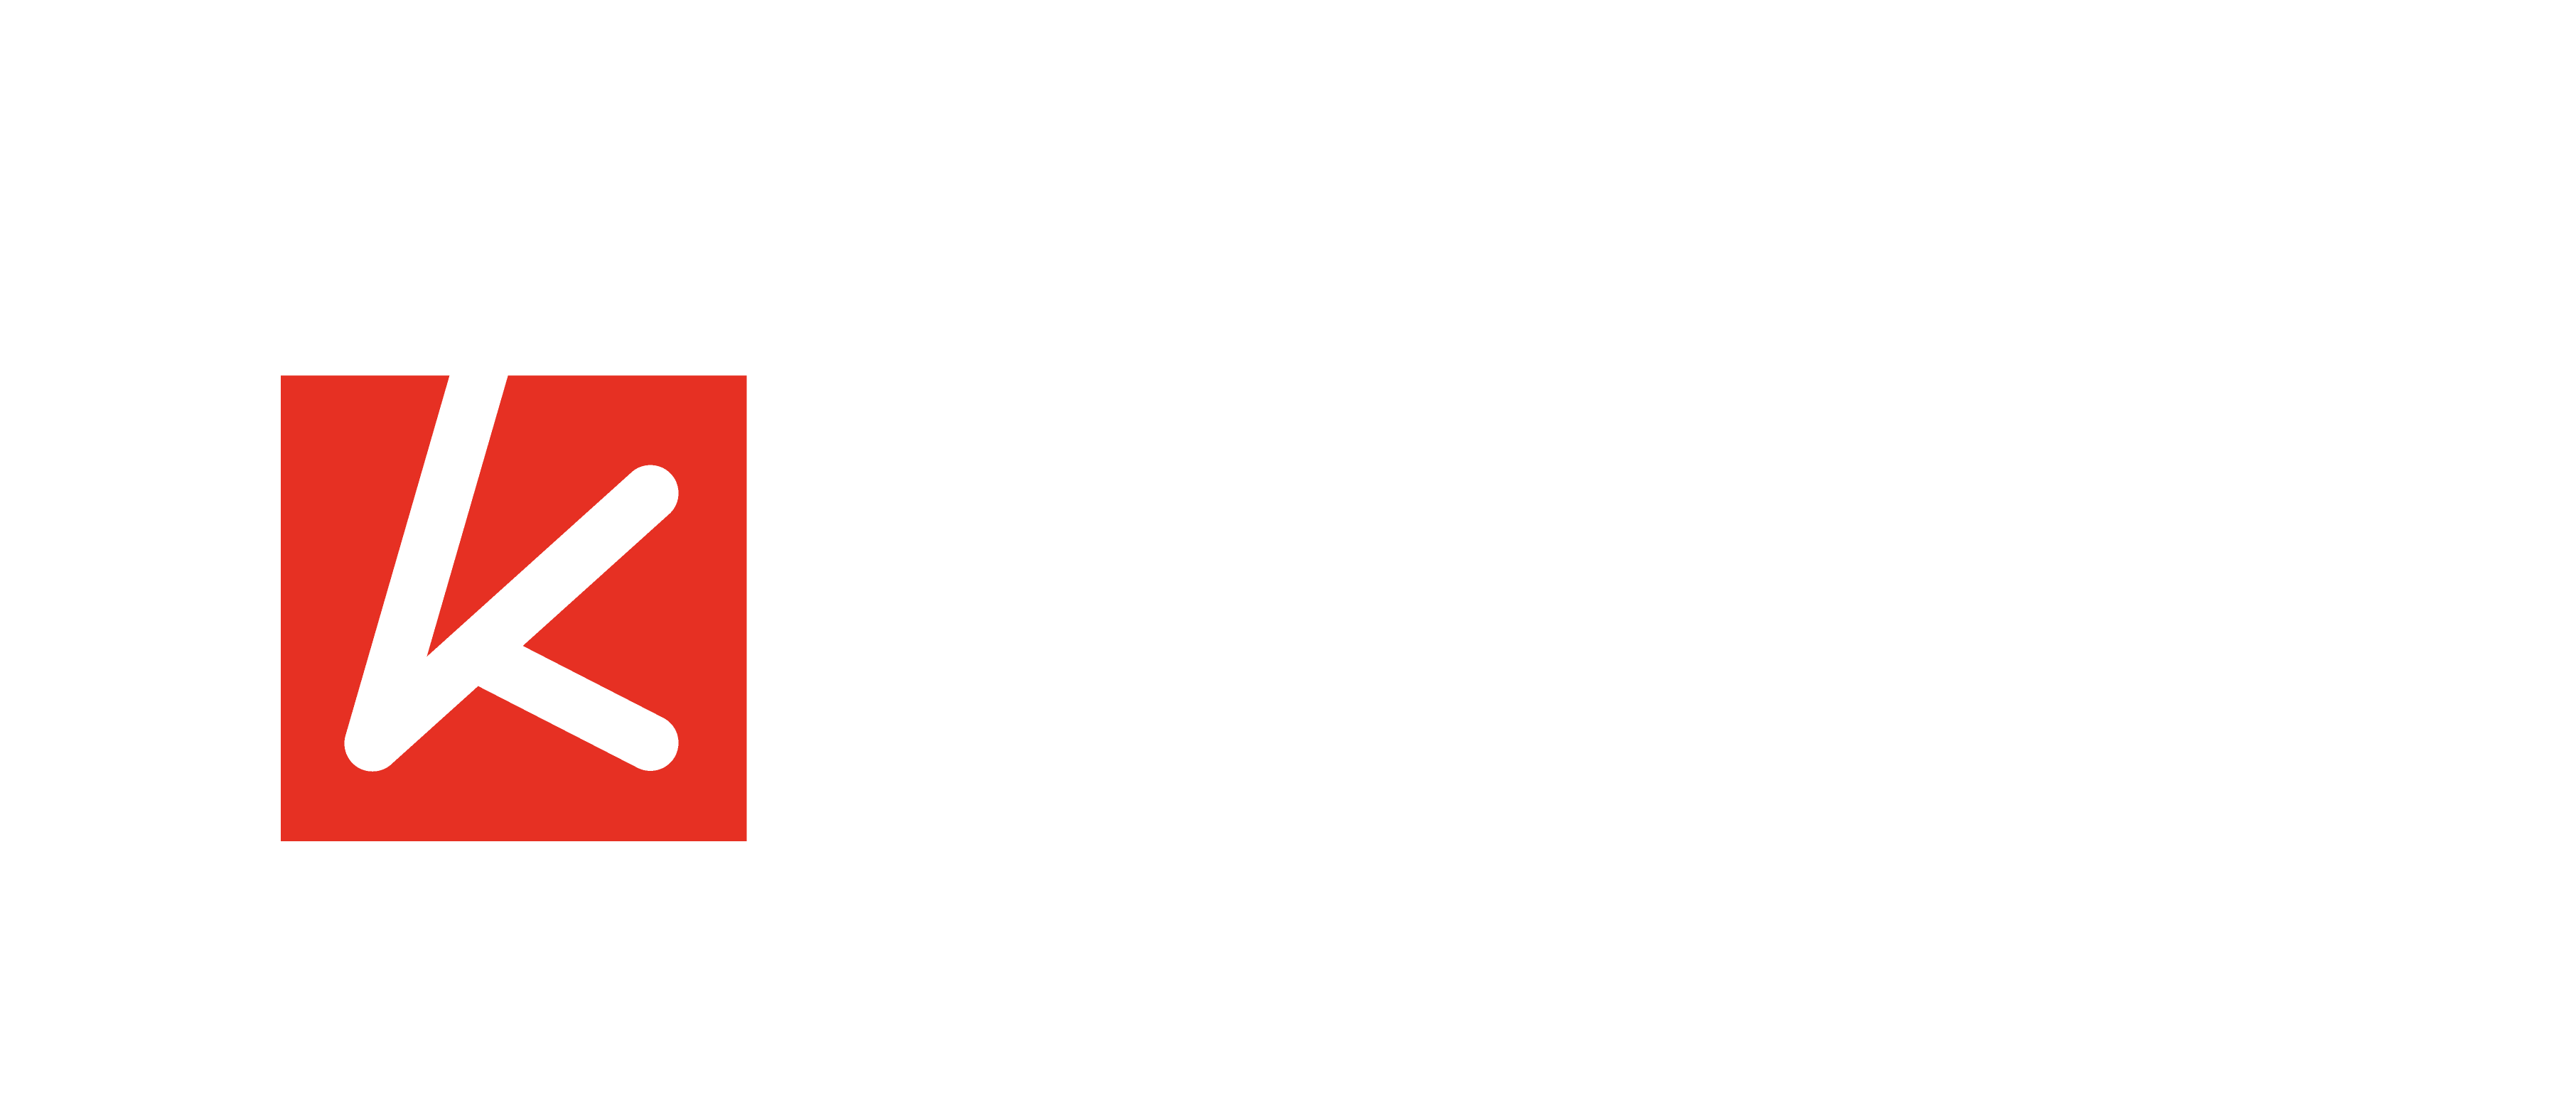 Kohinoor Viva City Logo